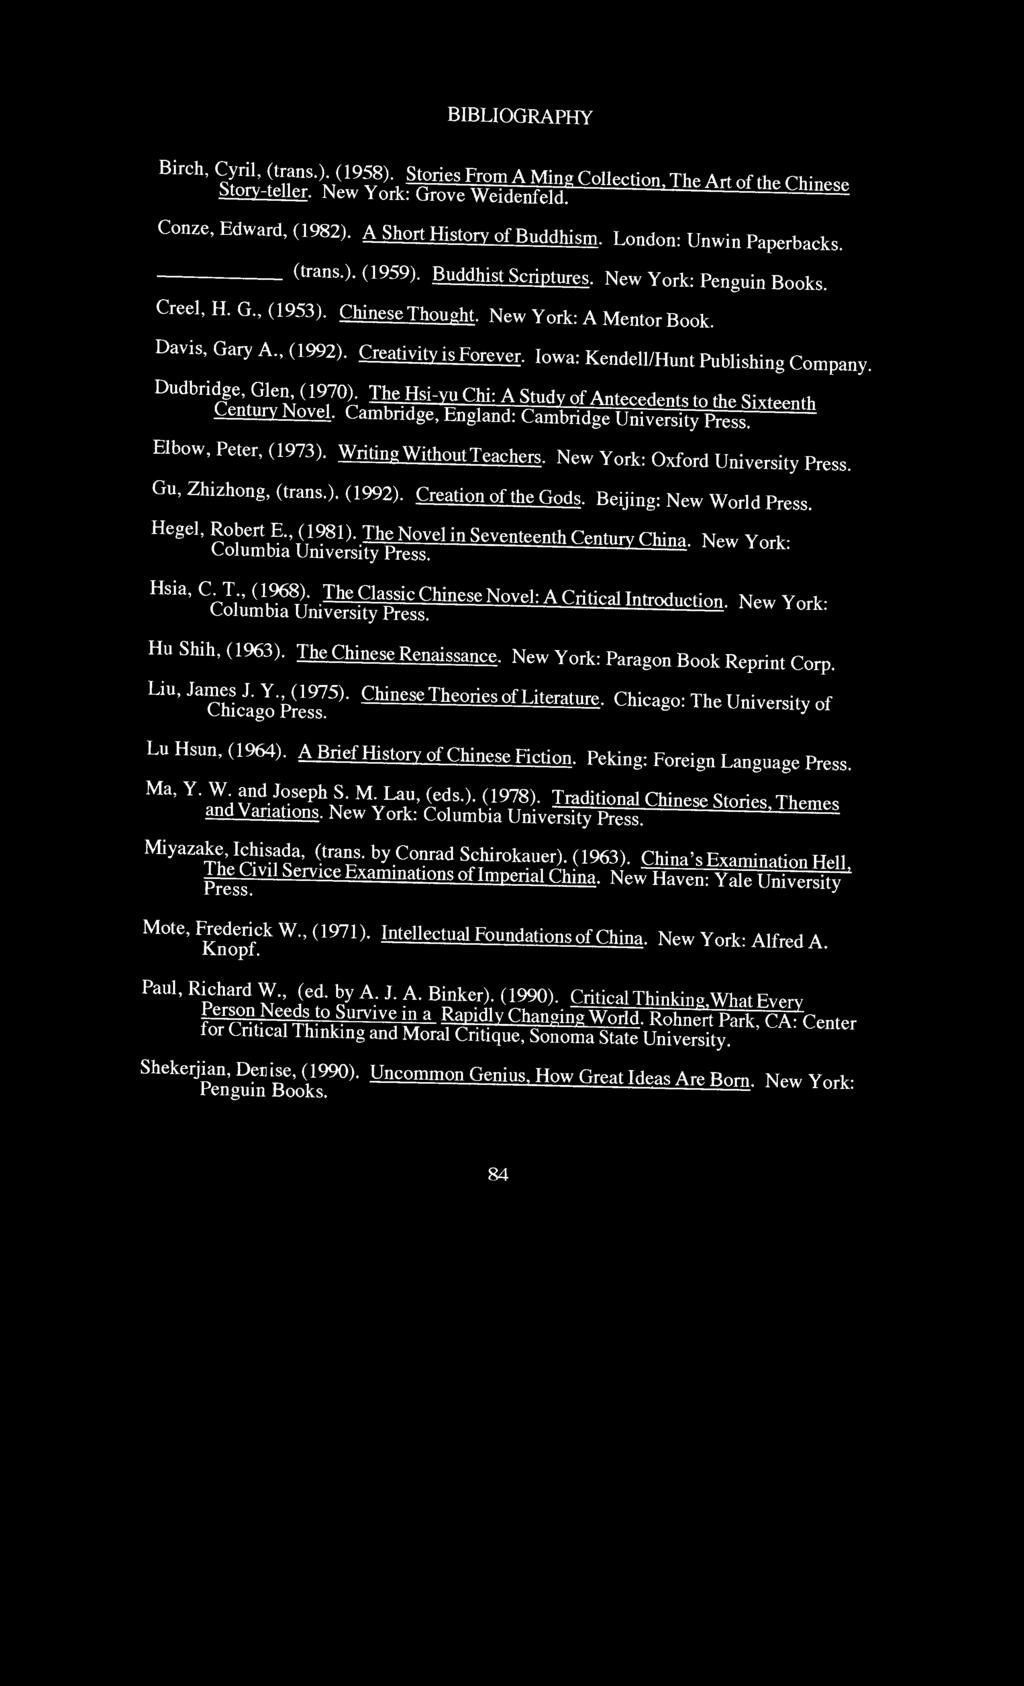 Iowa: Kendell/Hunt Publishing Company. Dudbridge, Glen, (1970). The Hsi-yu Chi: A Study of Antecedents to the Sixteenth Century Novel. Cambridge, England: Cambridge University Press.